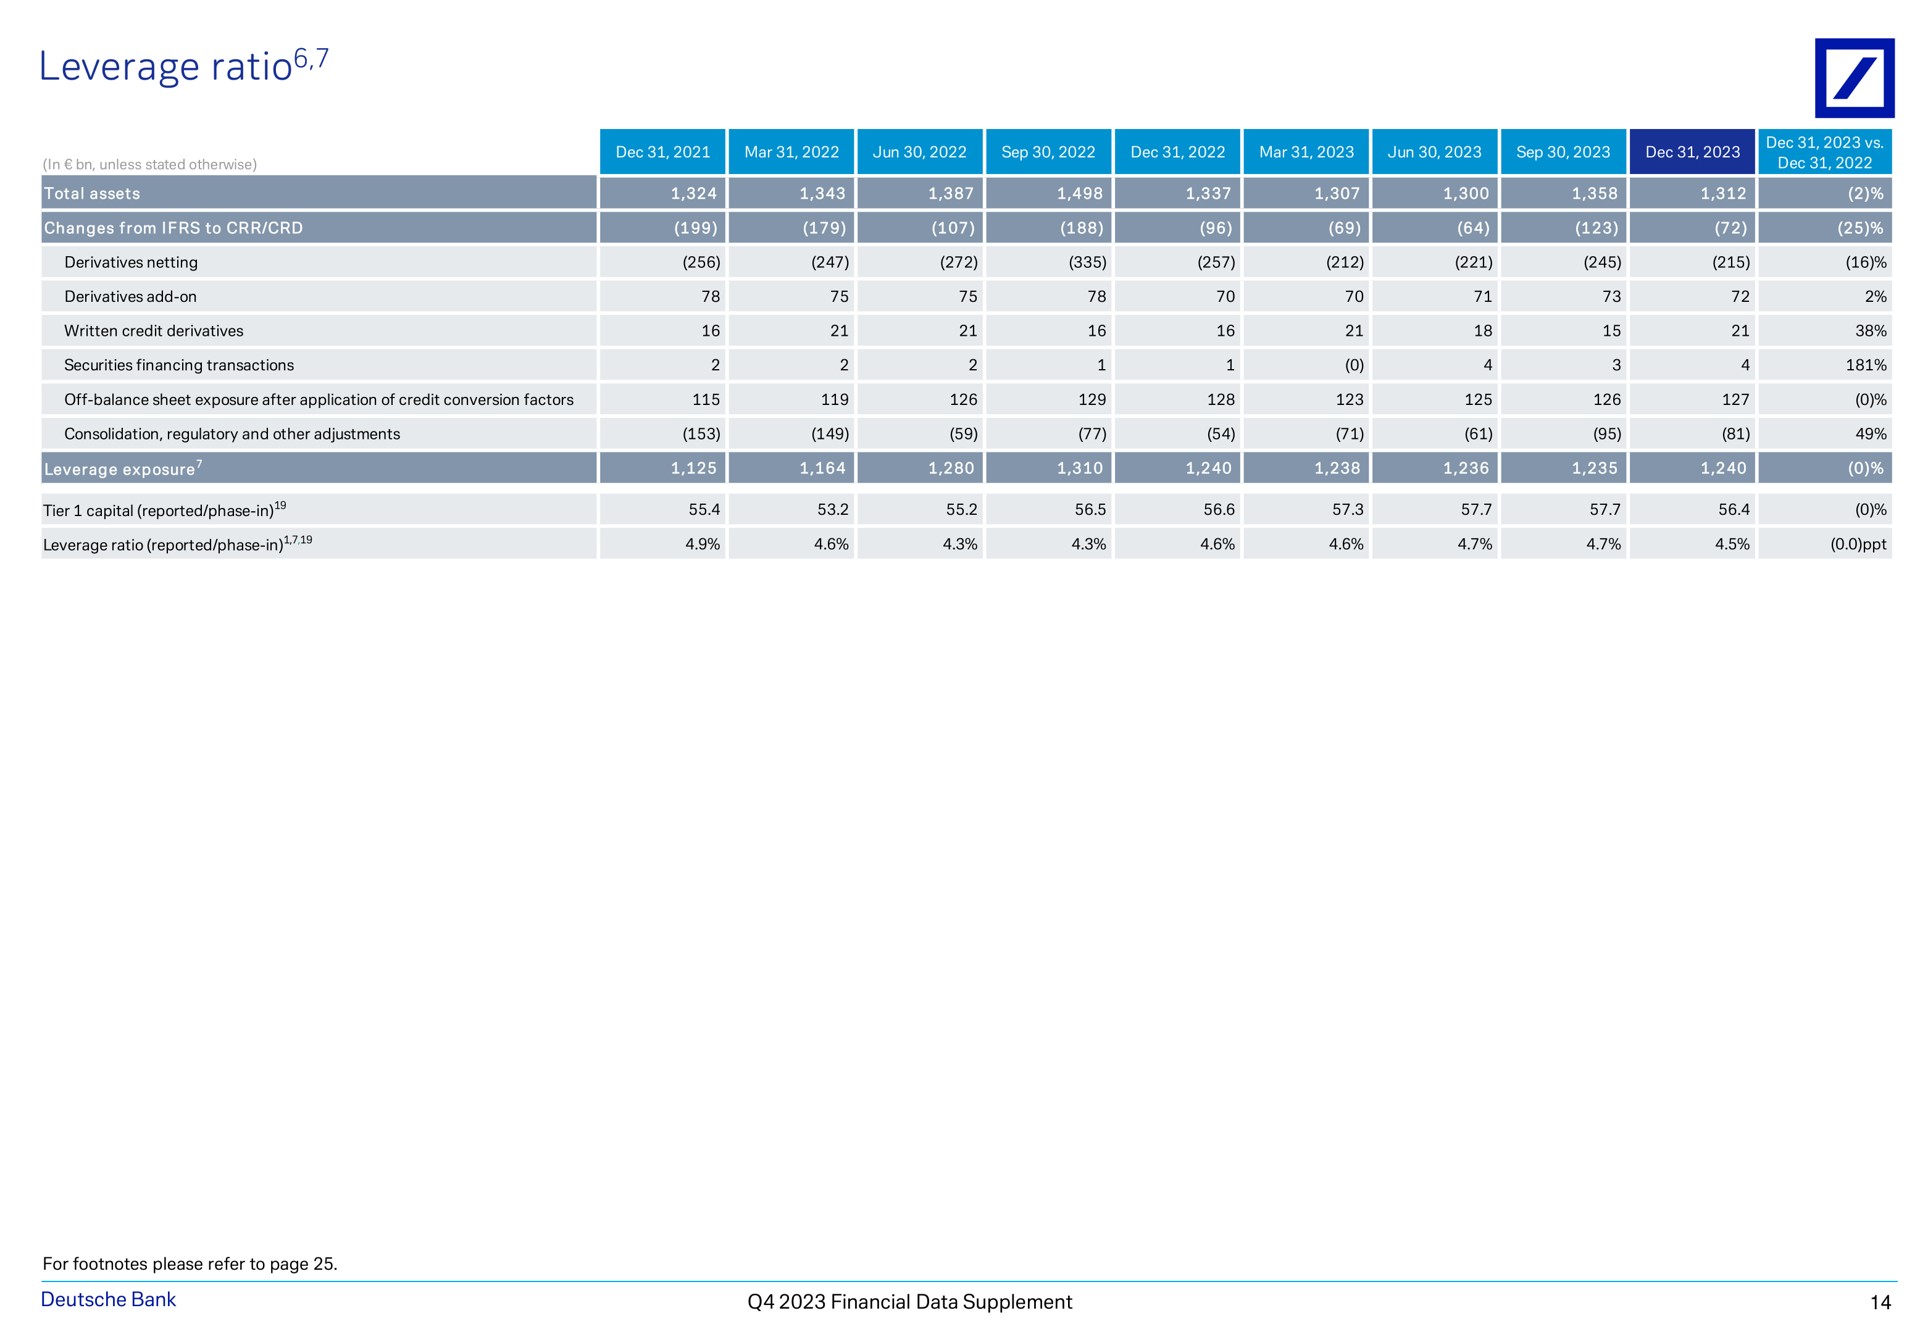 leverage ratio bank financial data supplement | Deutsche Bank